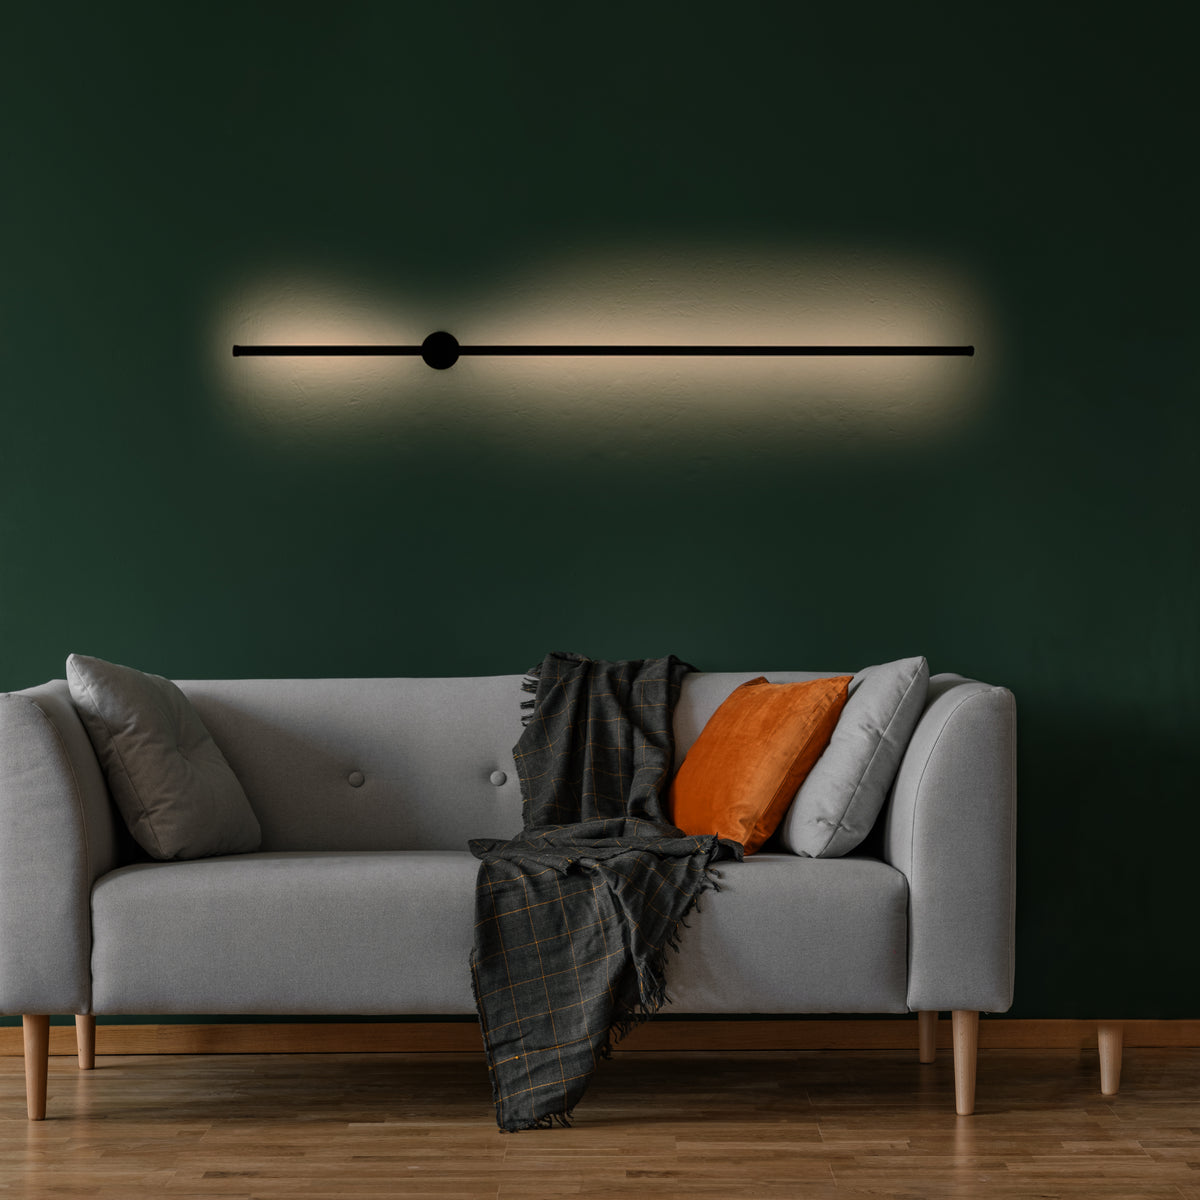 MINIMALIST LED LINE WALL LAMP | LED LINE WALL LAMP